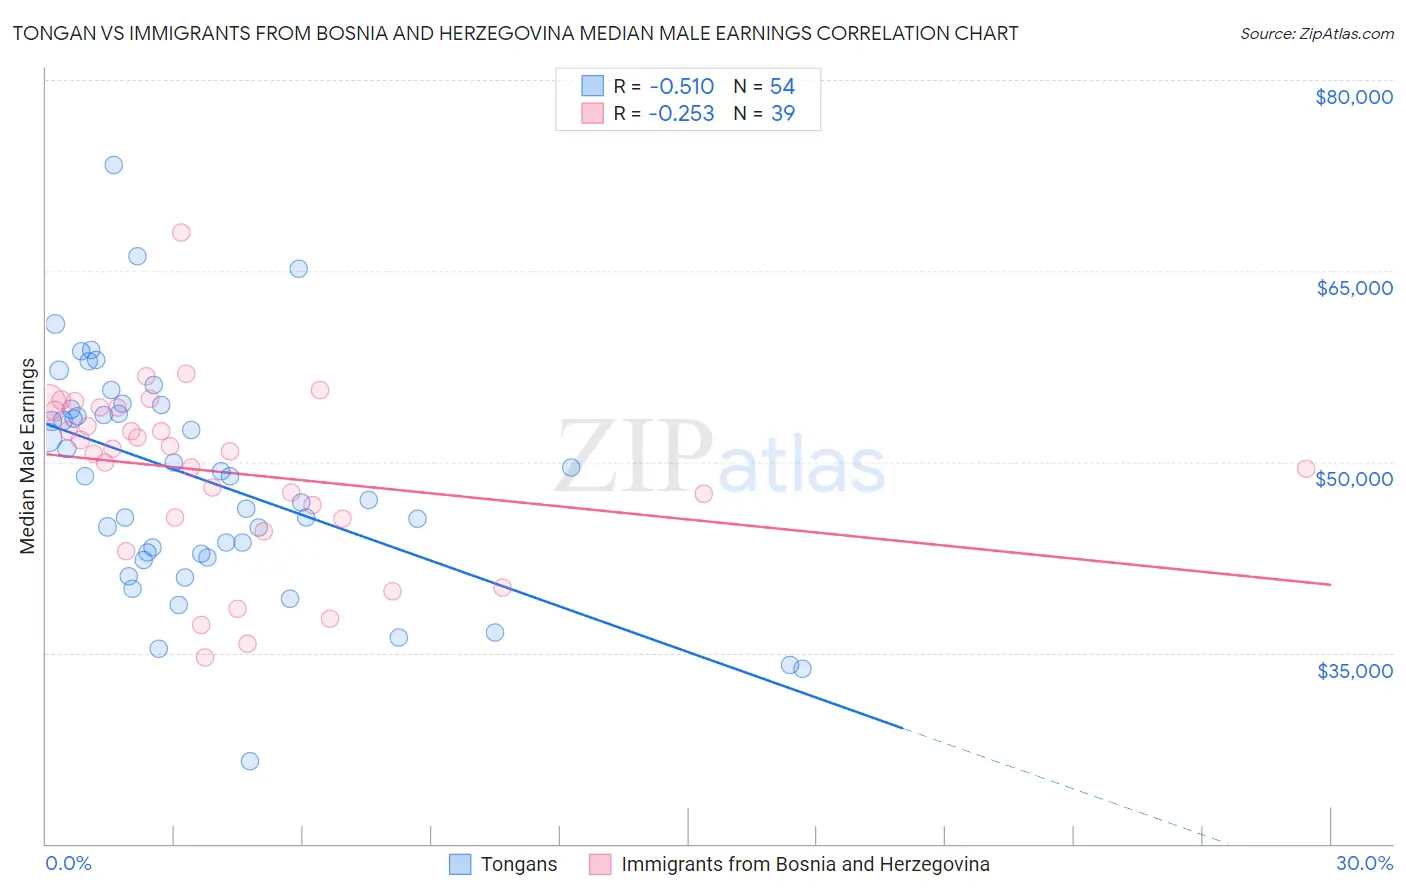 Tongan vs Immigrants from Bosnia and Herzegovina Median Male Earnings